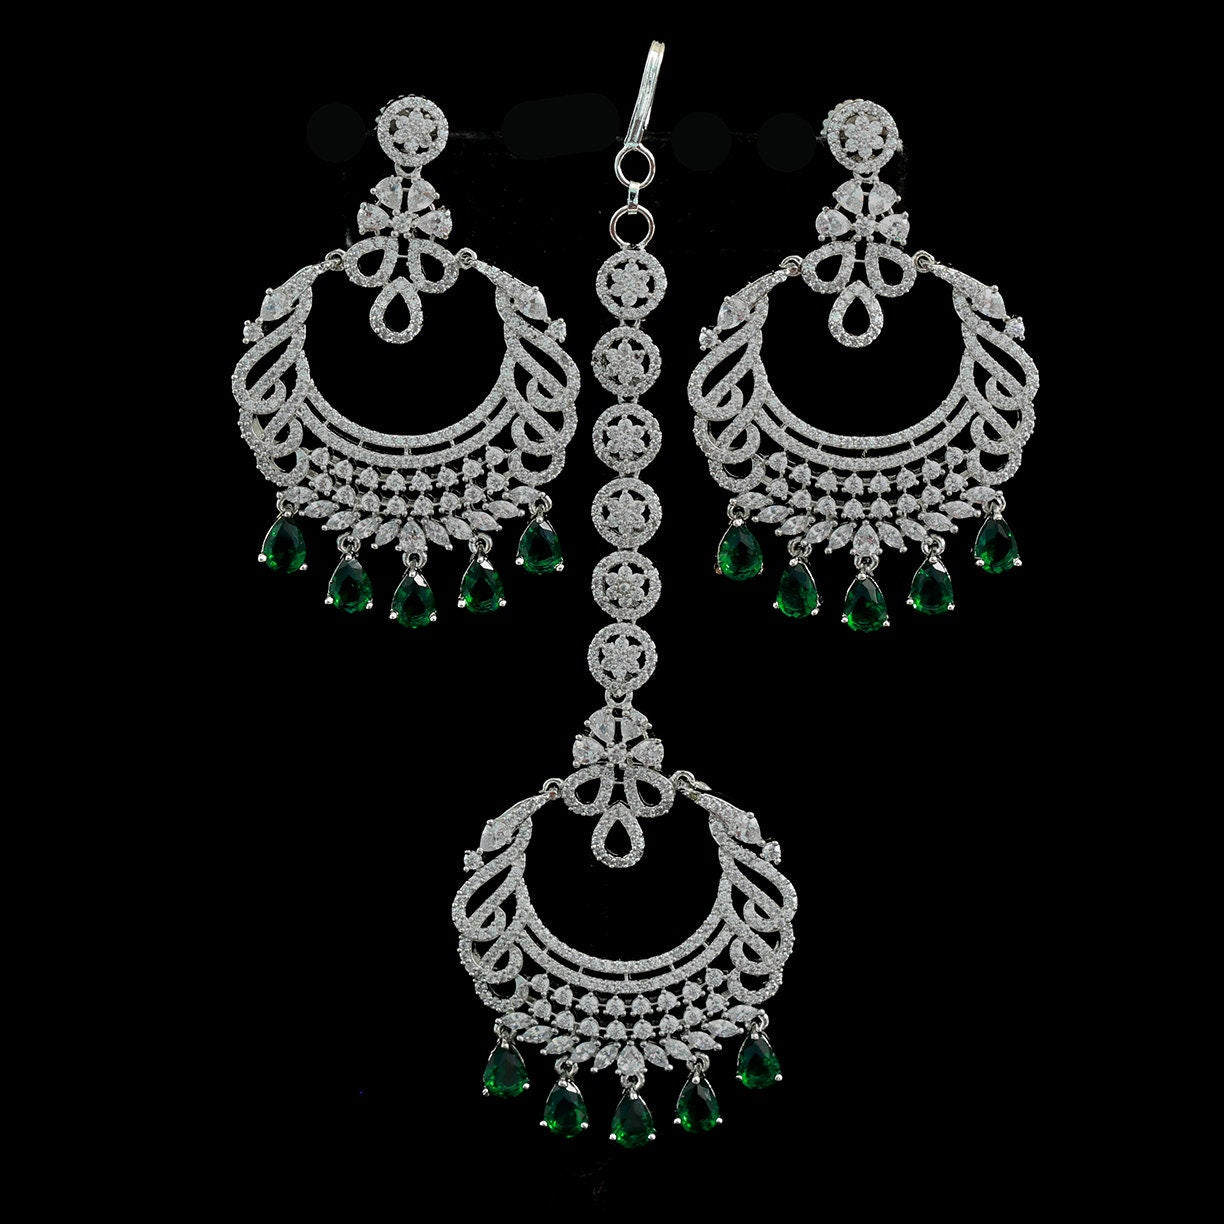 Silver chandbali earrings and maang Tikka | Indian earrings tikka set | American diamond jewelry jhumka earrings | punjabi earrings design